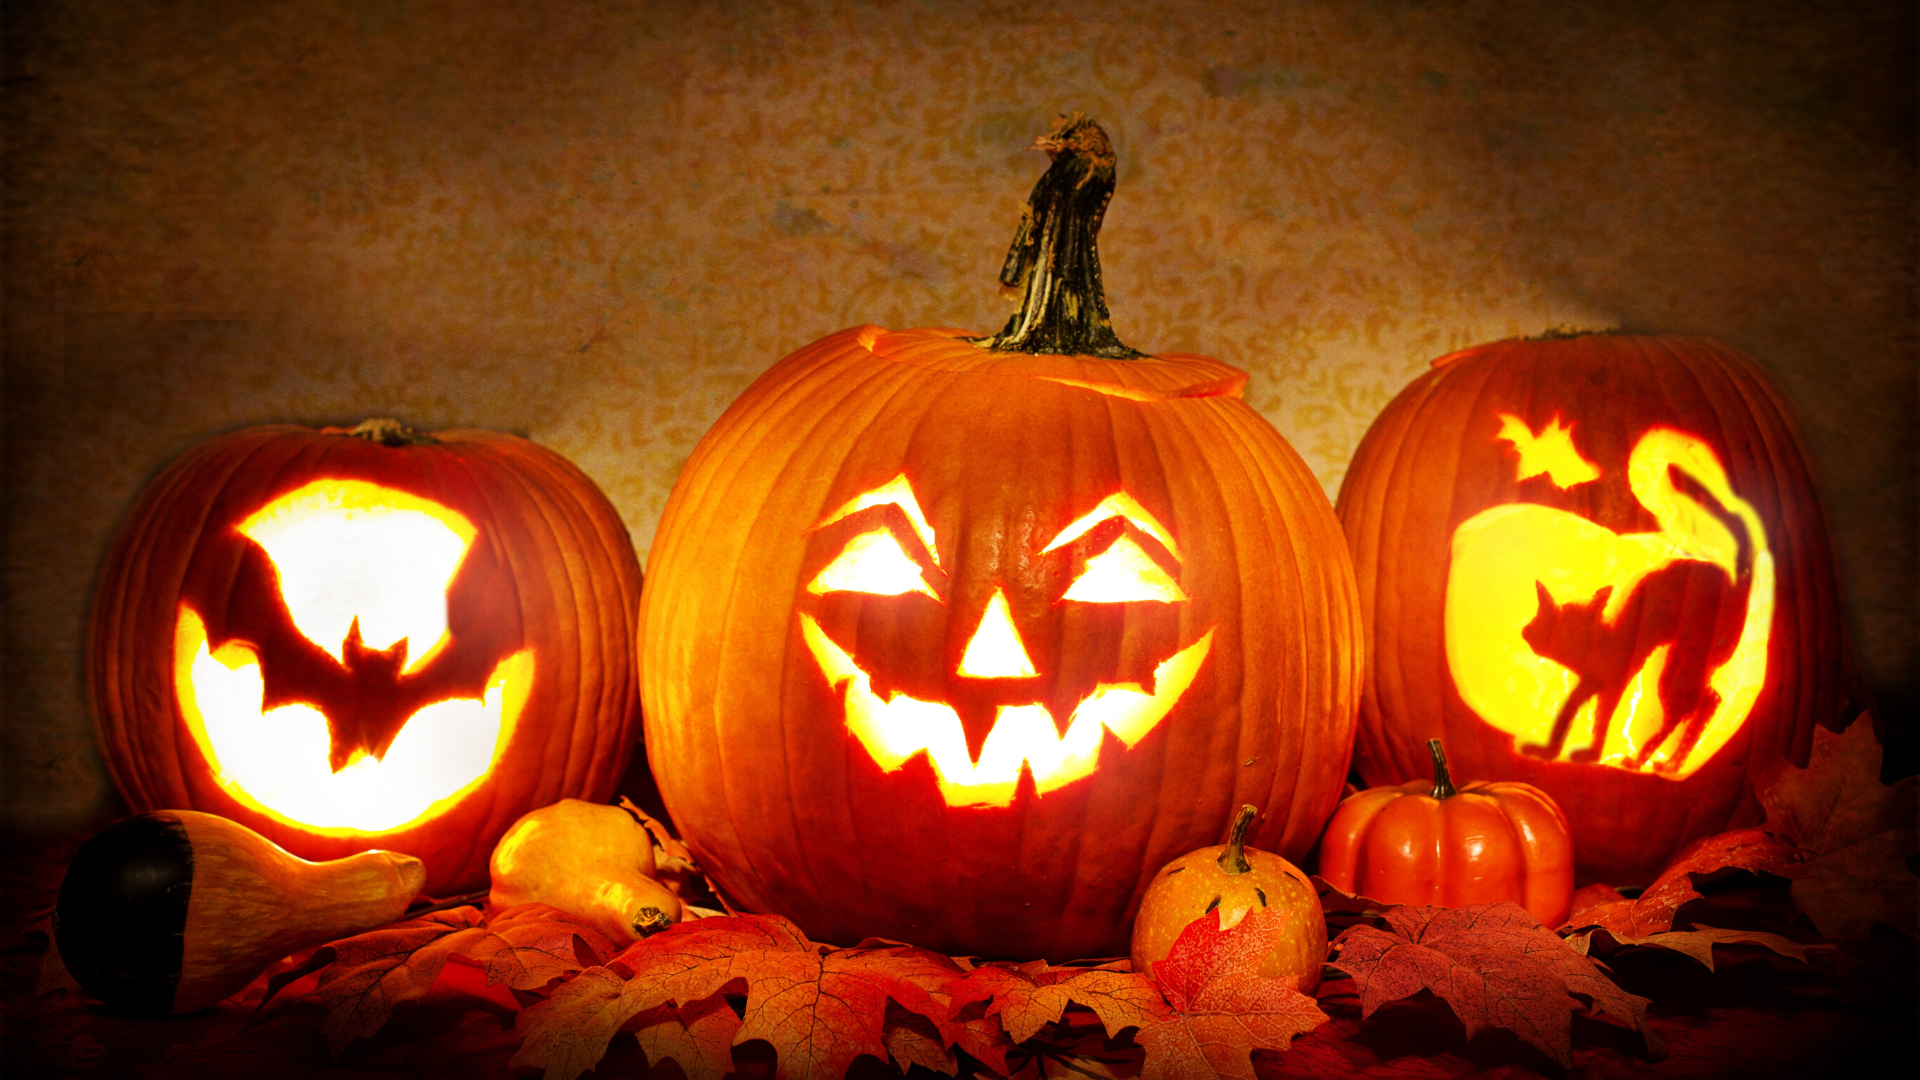 Three carved pumpkins